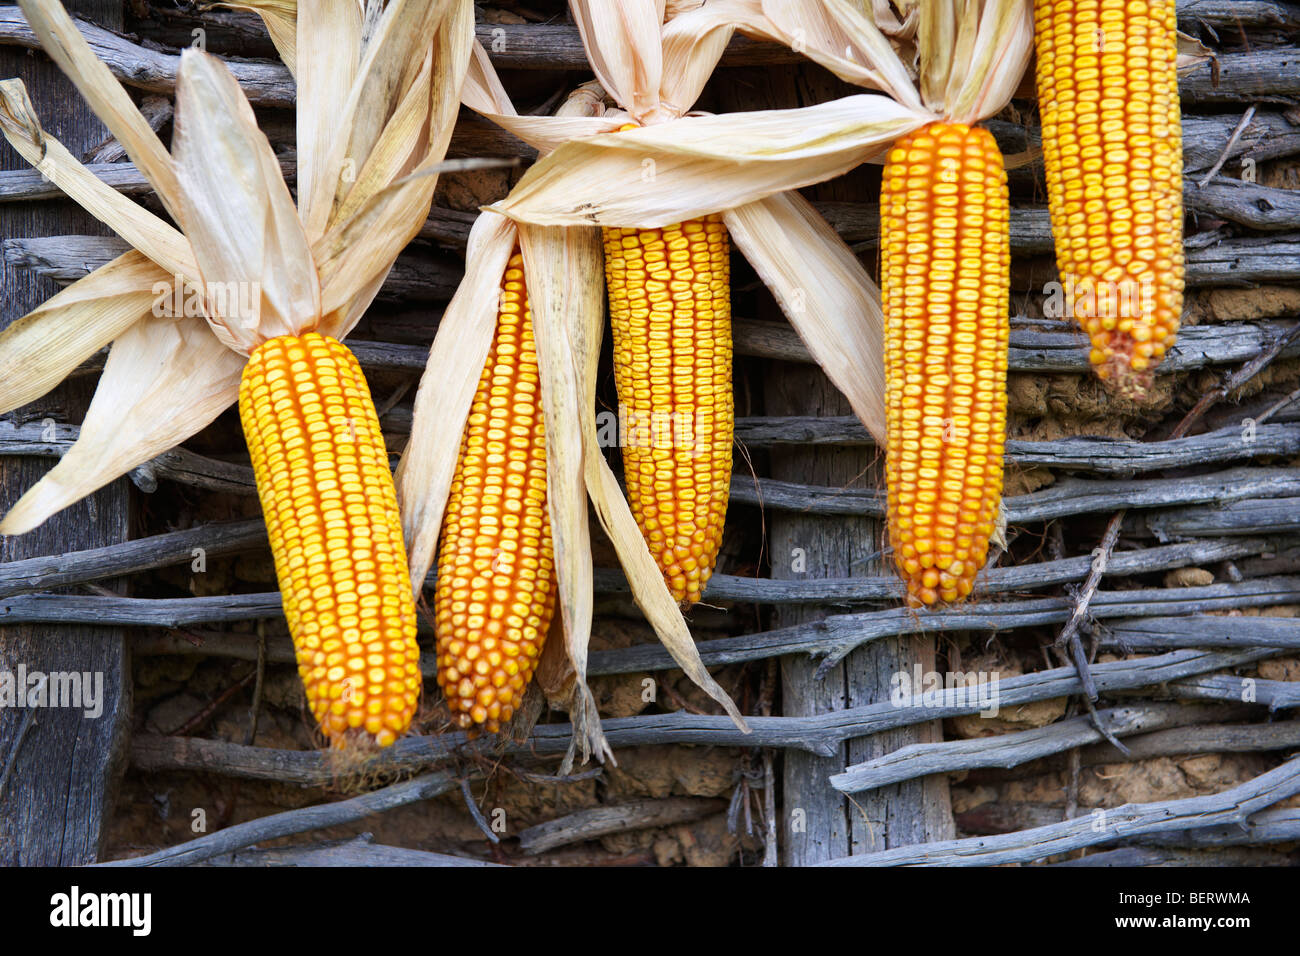 Corn cobs drying - Hungary Stock Photo